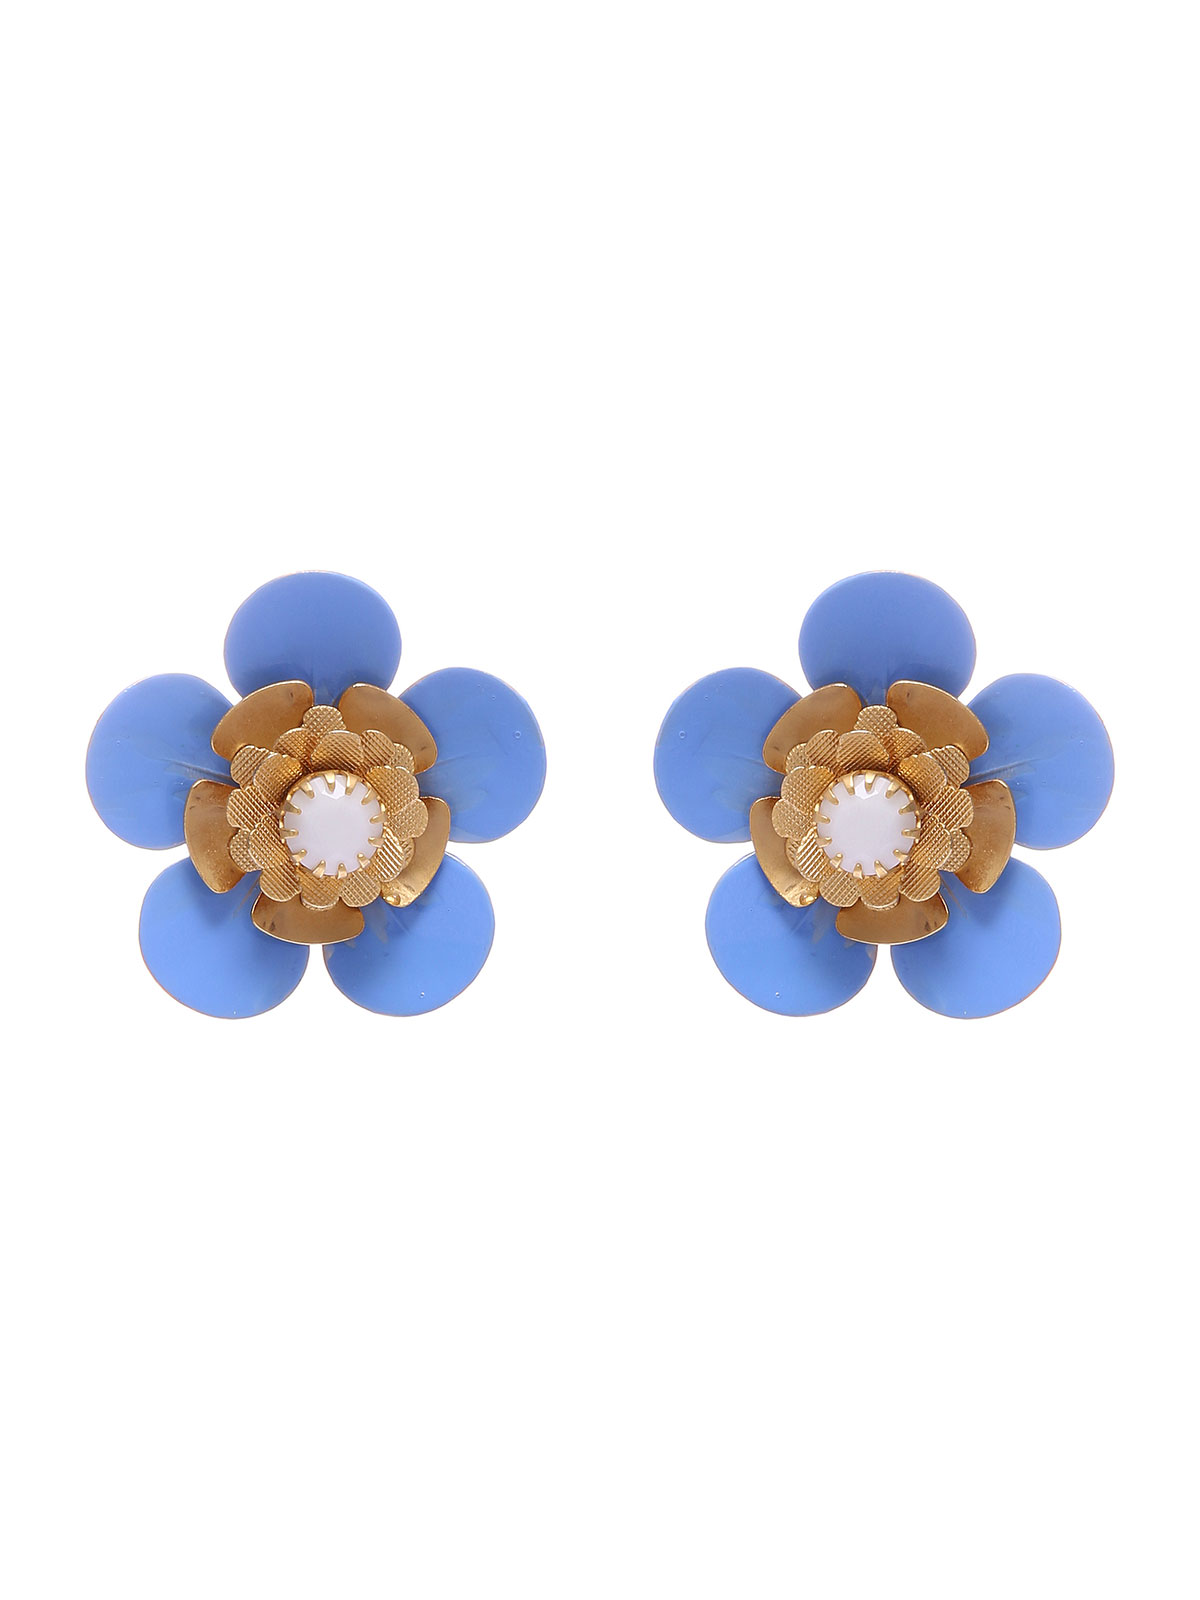 Flower enamelled earrings